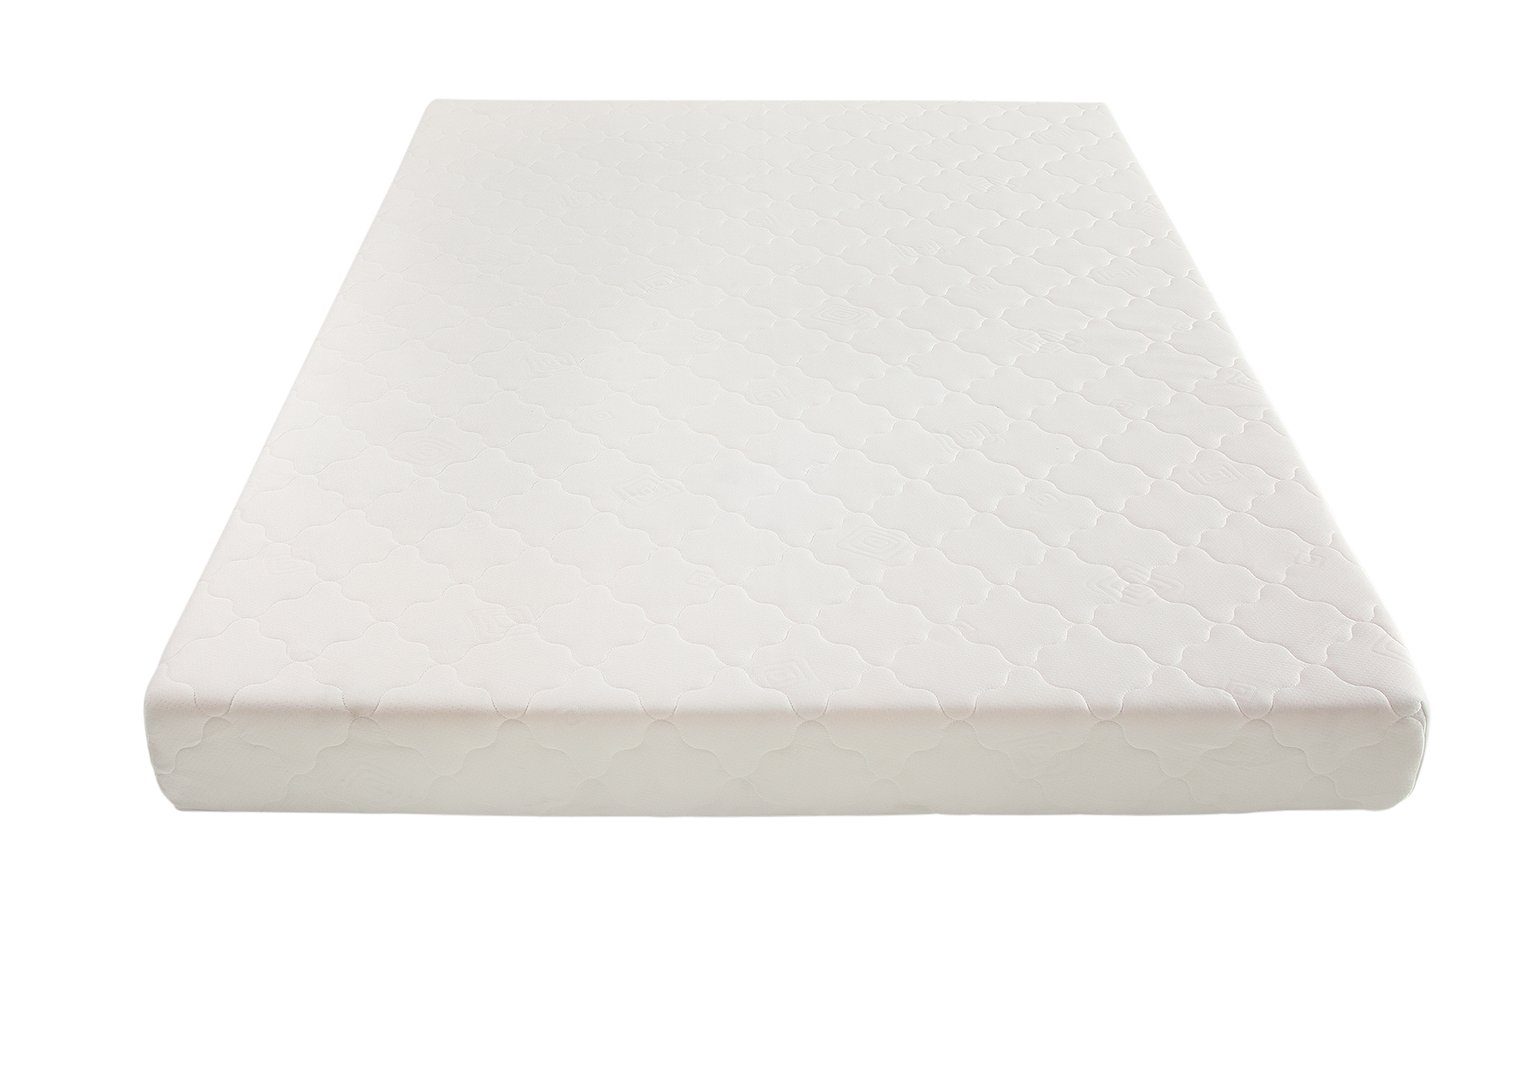 i-sleep memory foam rolled single mattress